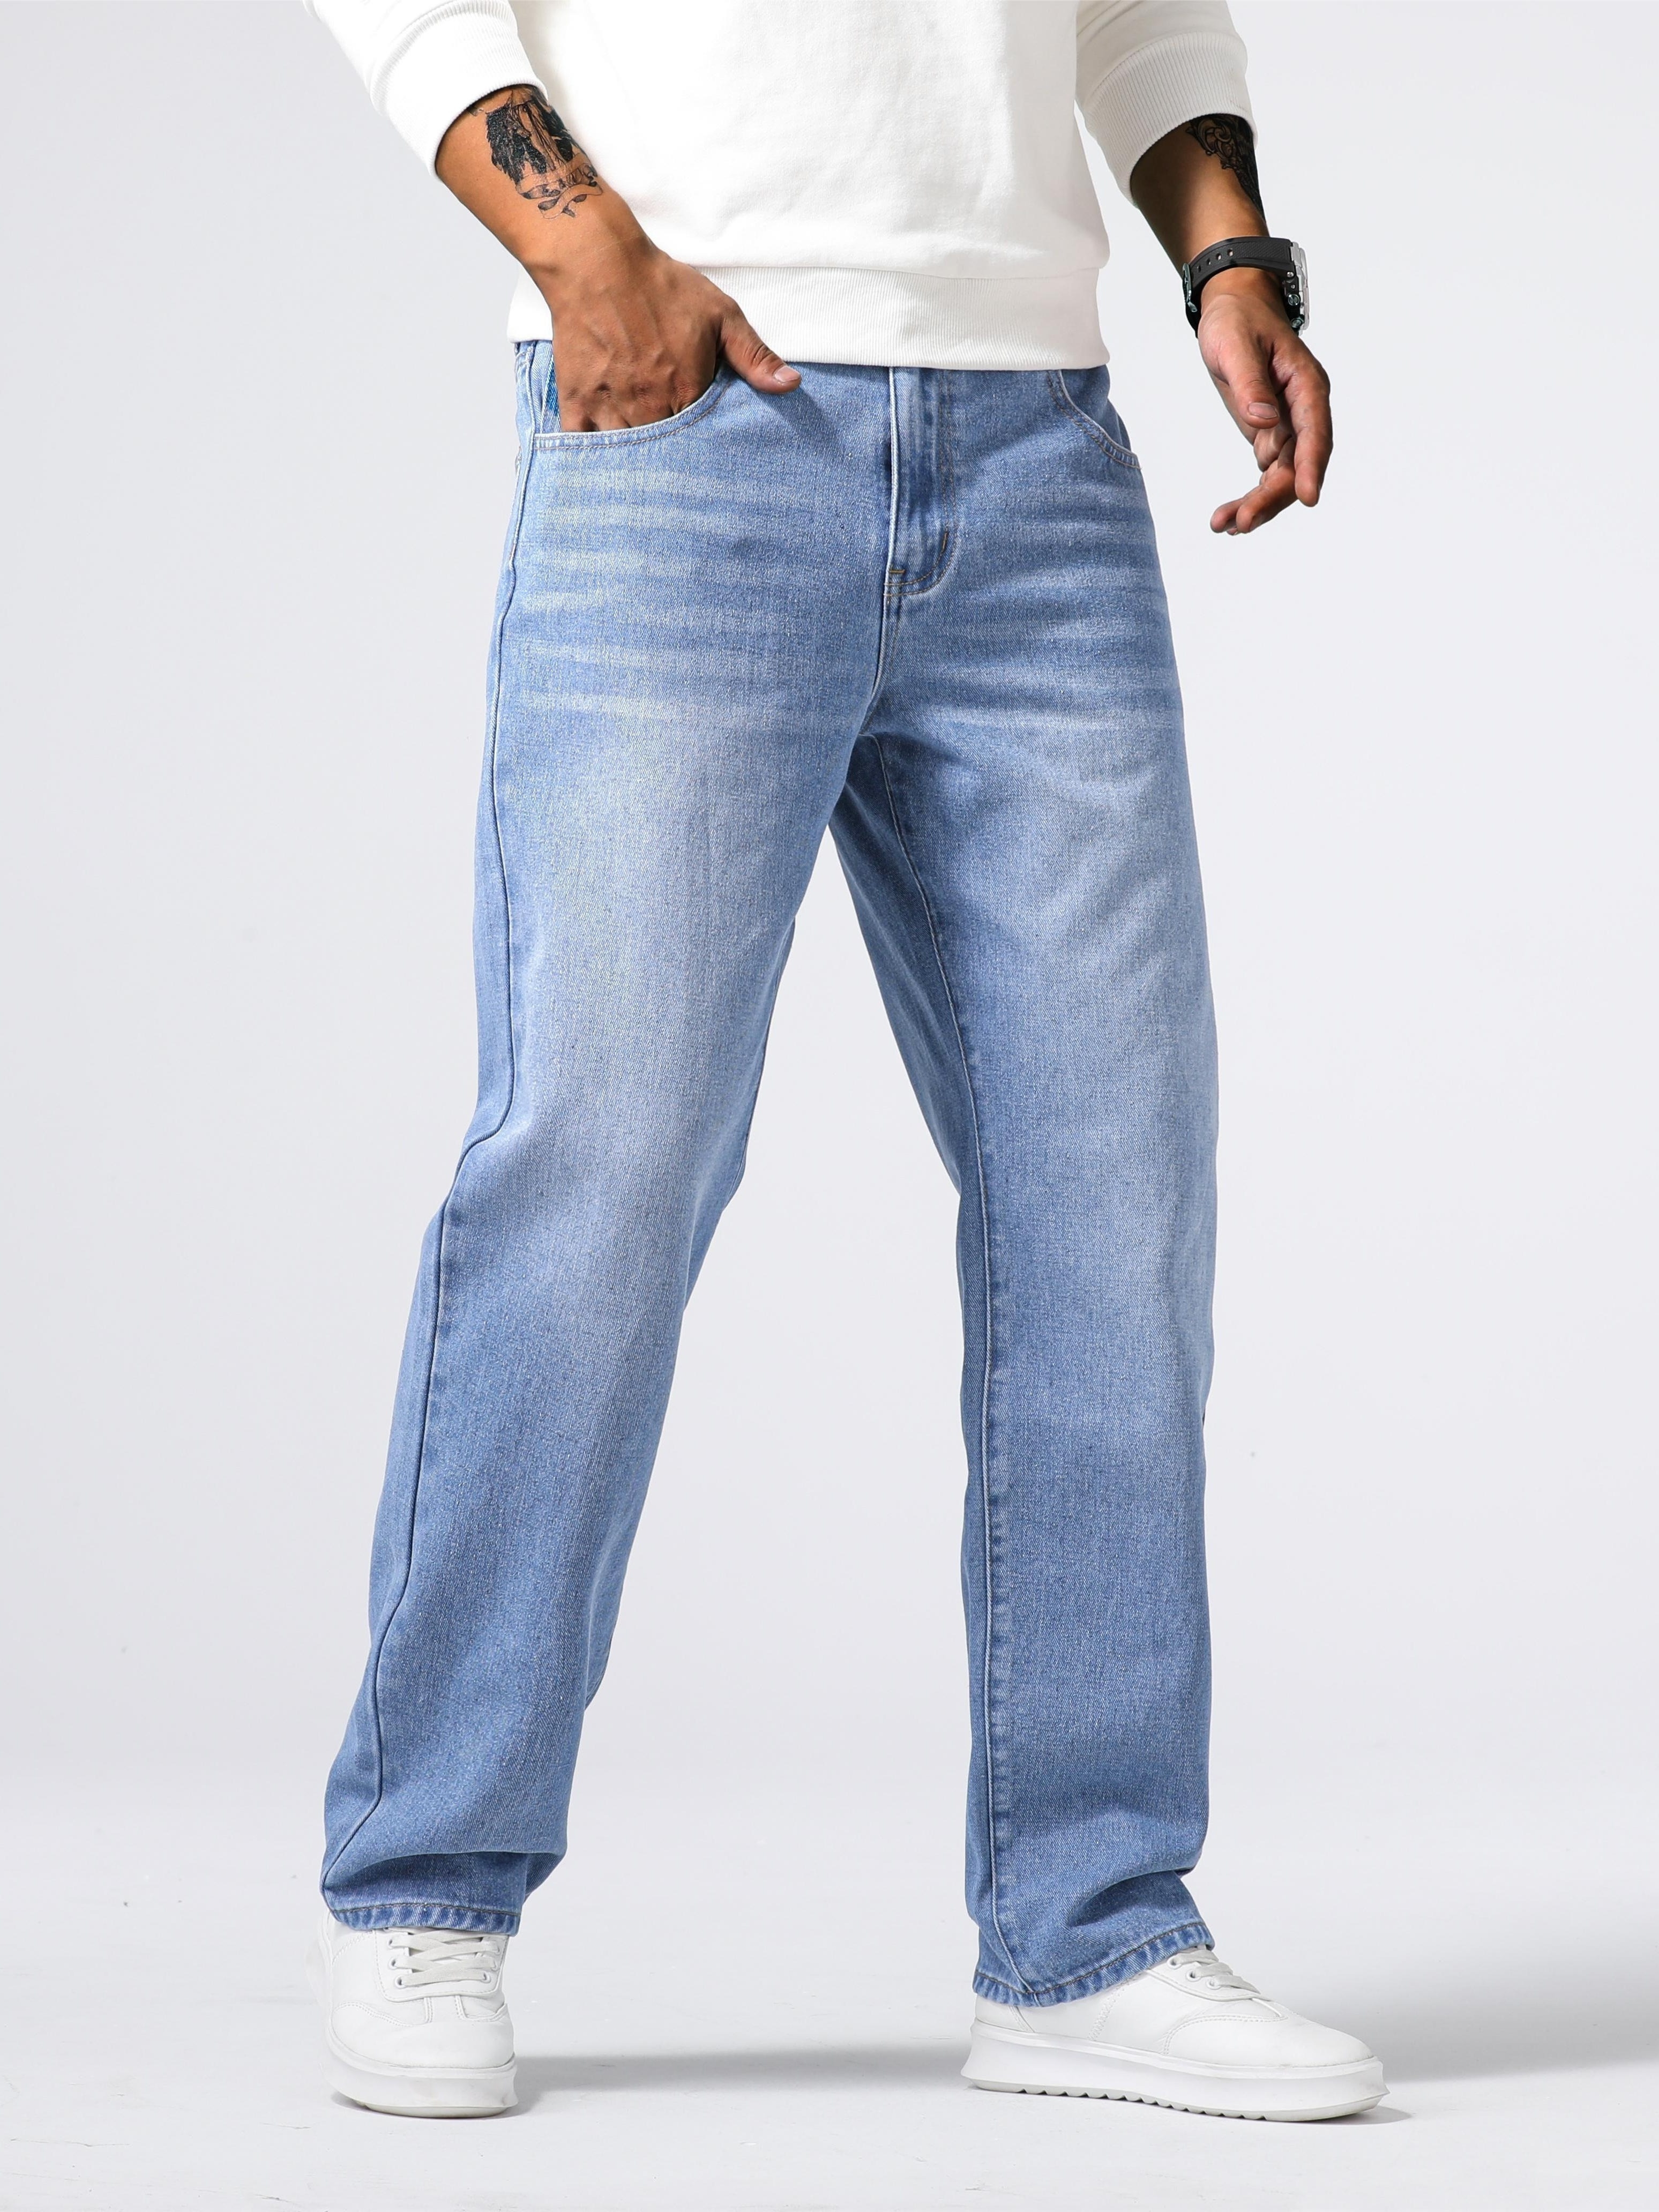 Men's Casual Loose Fit Jeans Street Style Straight Leg Denim